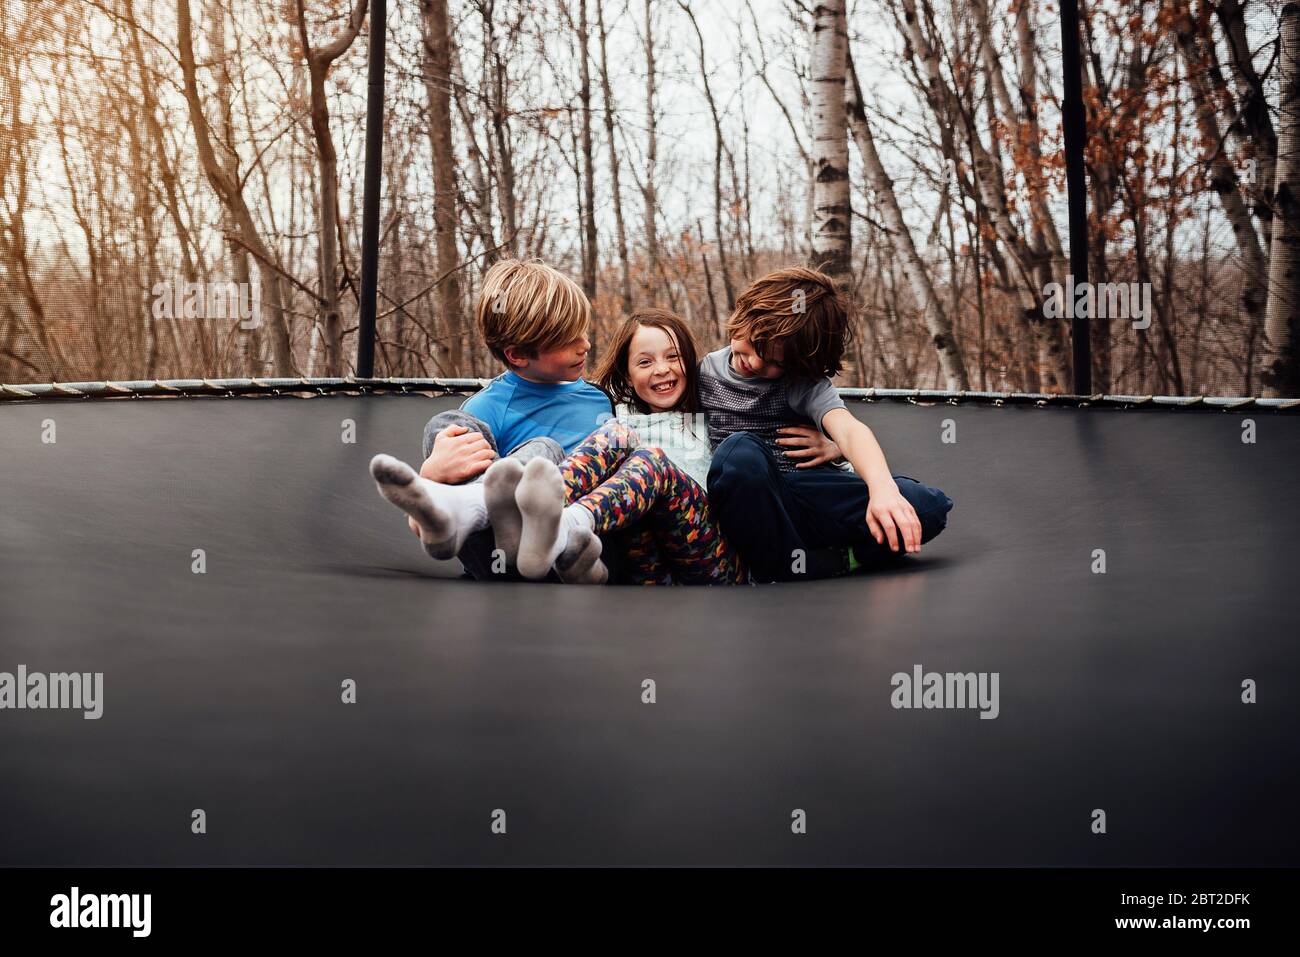 Three children playing on a trampoline, USA Stock Photo